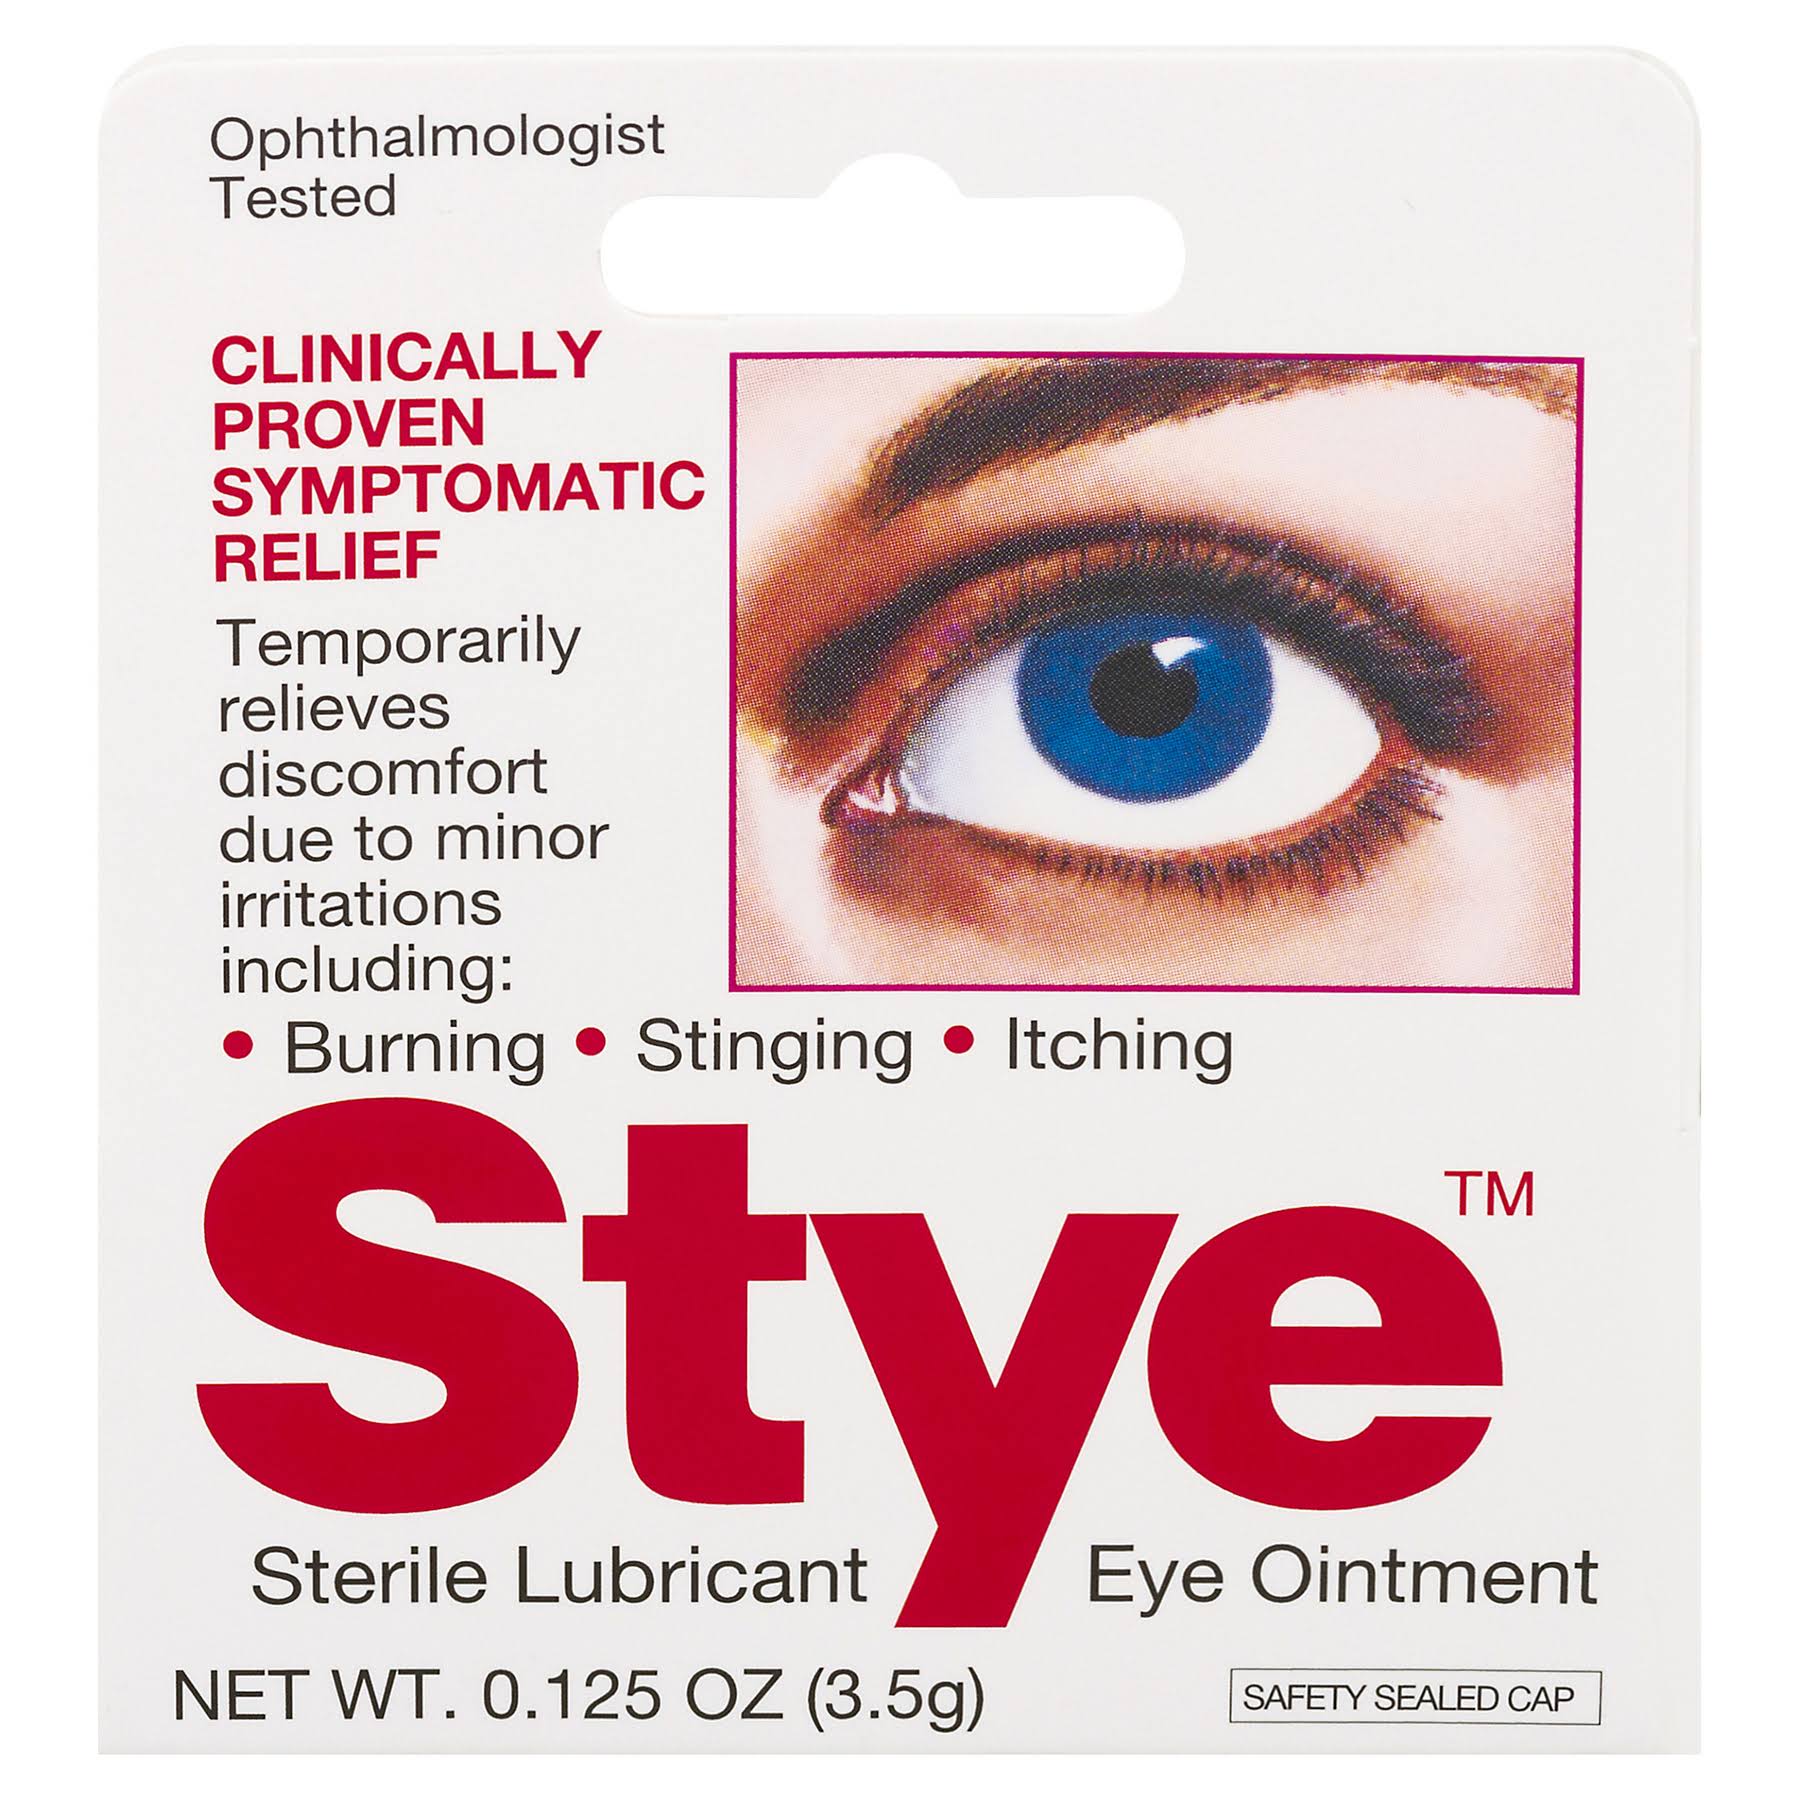 Stye Sterile Lubricant Ointment - 3.5g